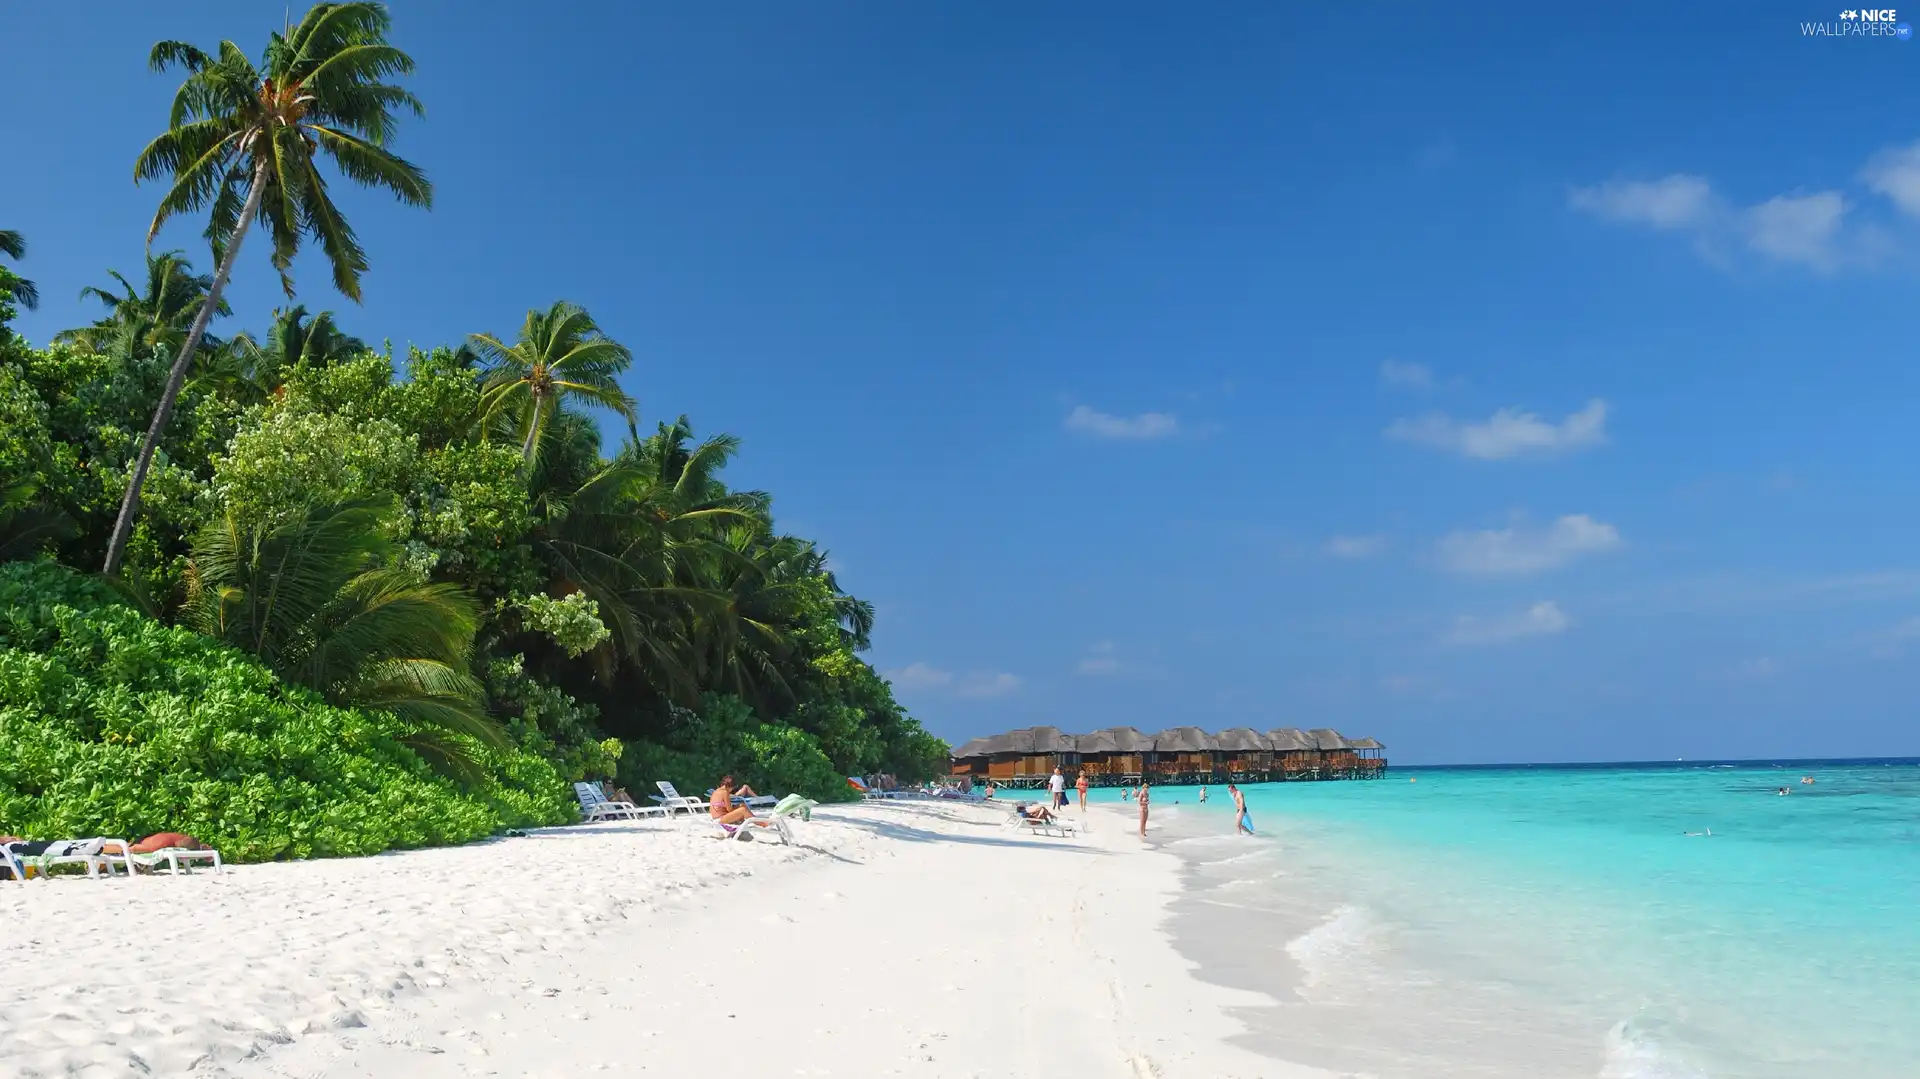 Beaches, Sky, fihalhohi, Palms, Maldives